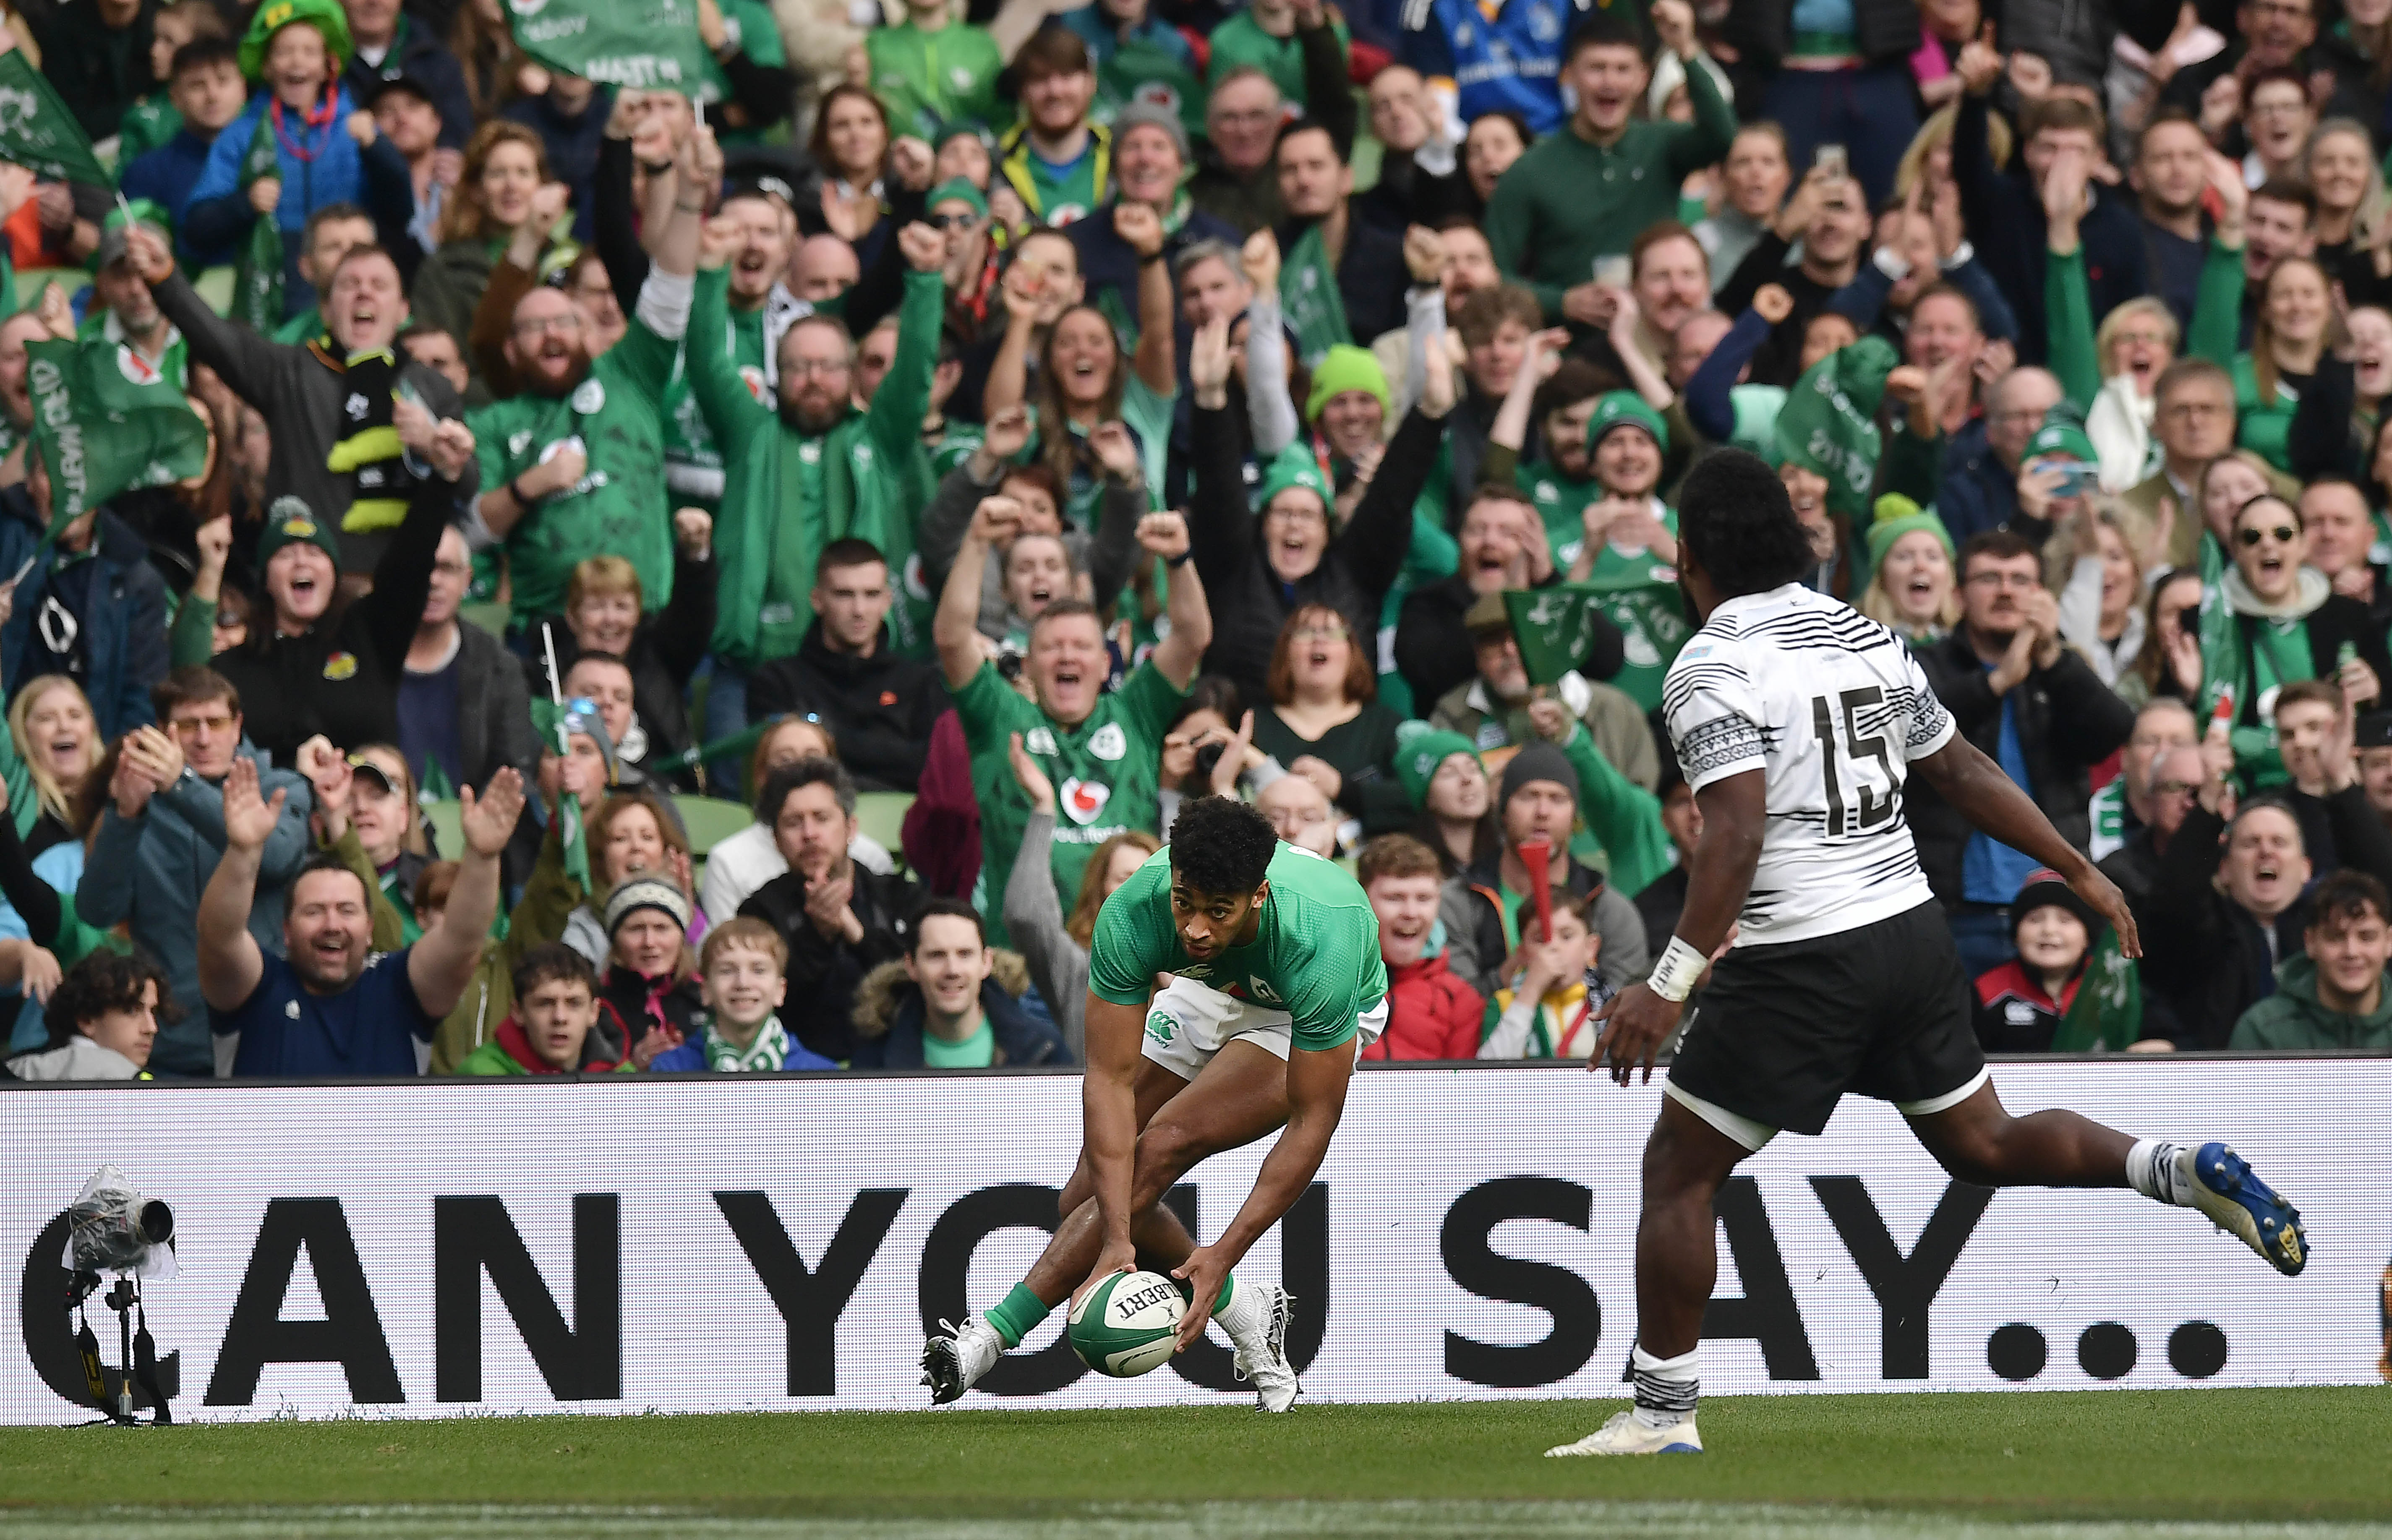 Robert Baloucoune scored one of Ireland’s five tries